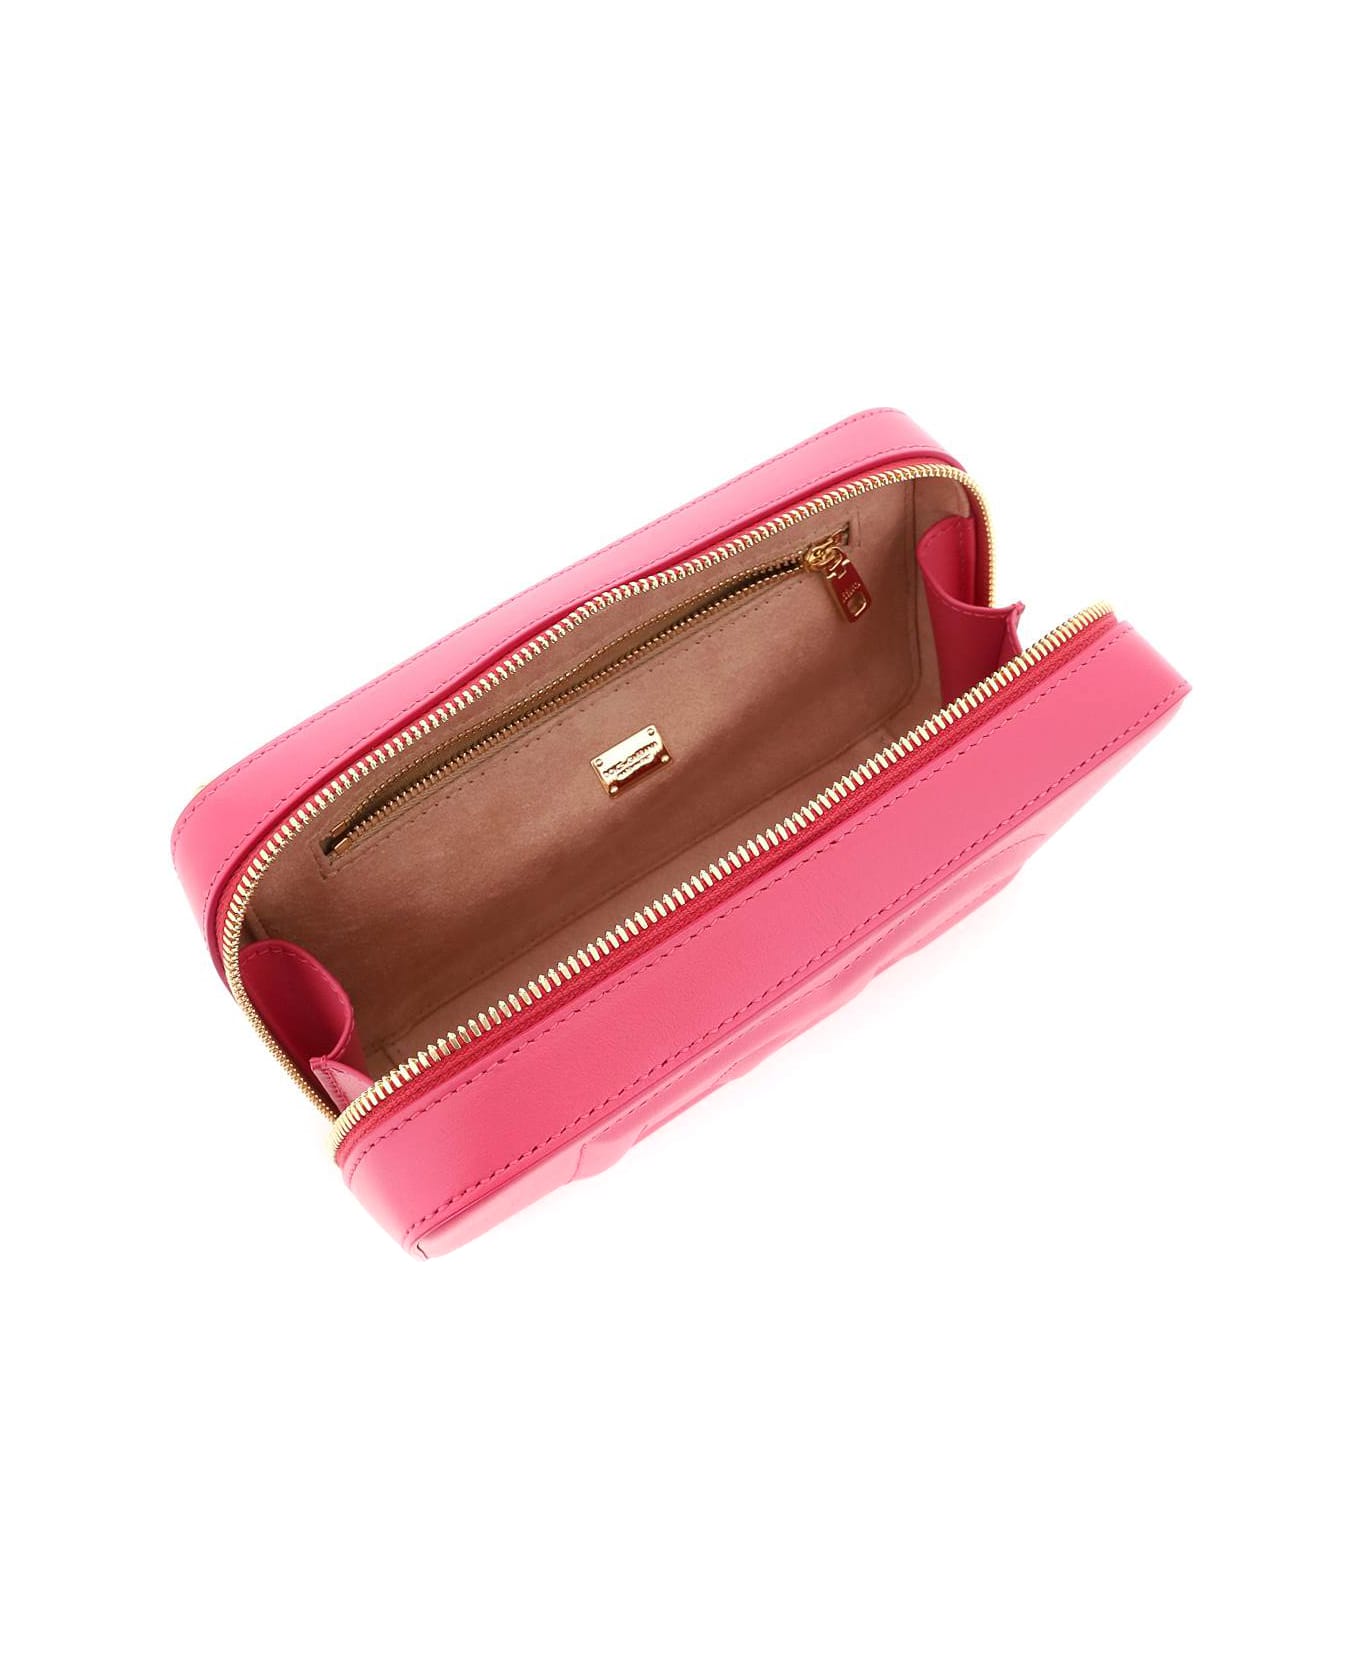 Dolce & Gabbana Leather Camera Bag - Pink